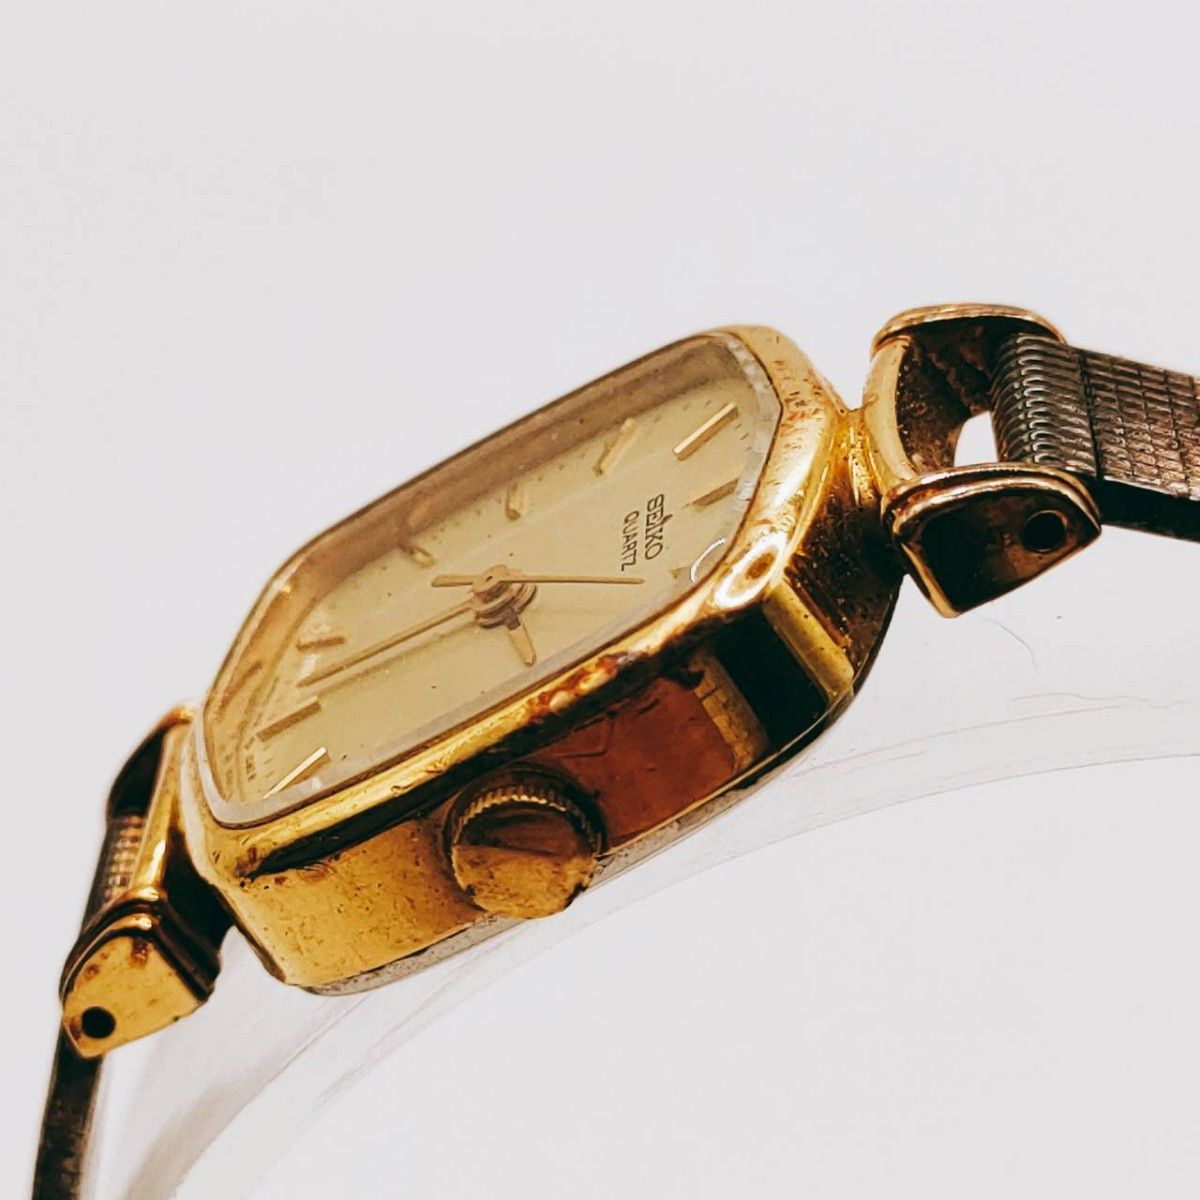 SEIKO セイコー 1421-5630 腕時計 クウォーツ 3針 金色文字盤 ゴールド基調 時計 とけい トケイ アクセサリー 